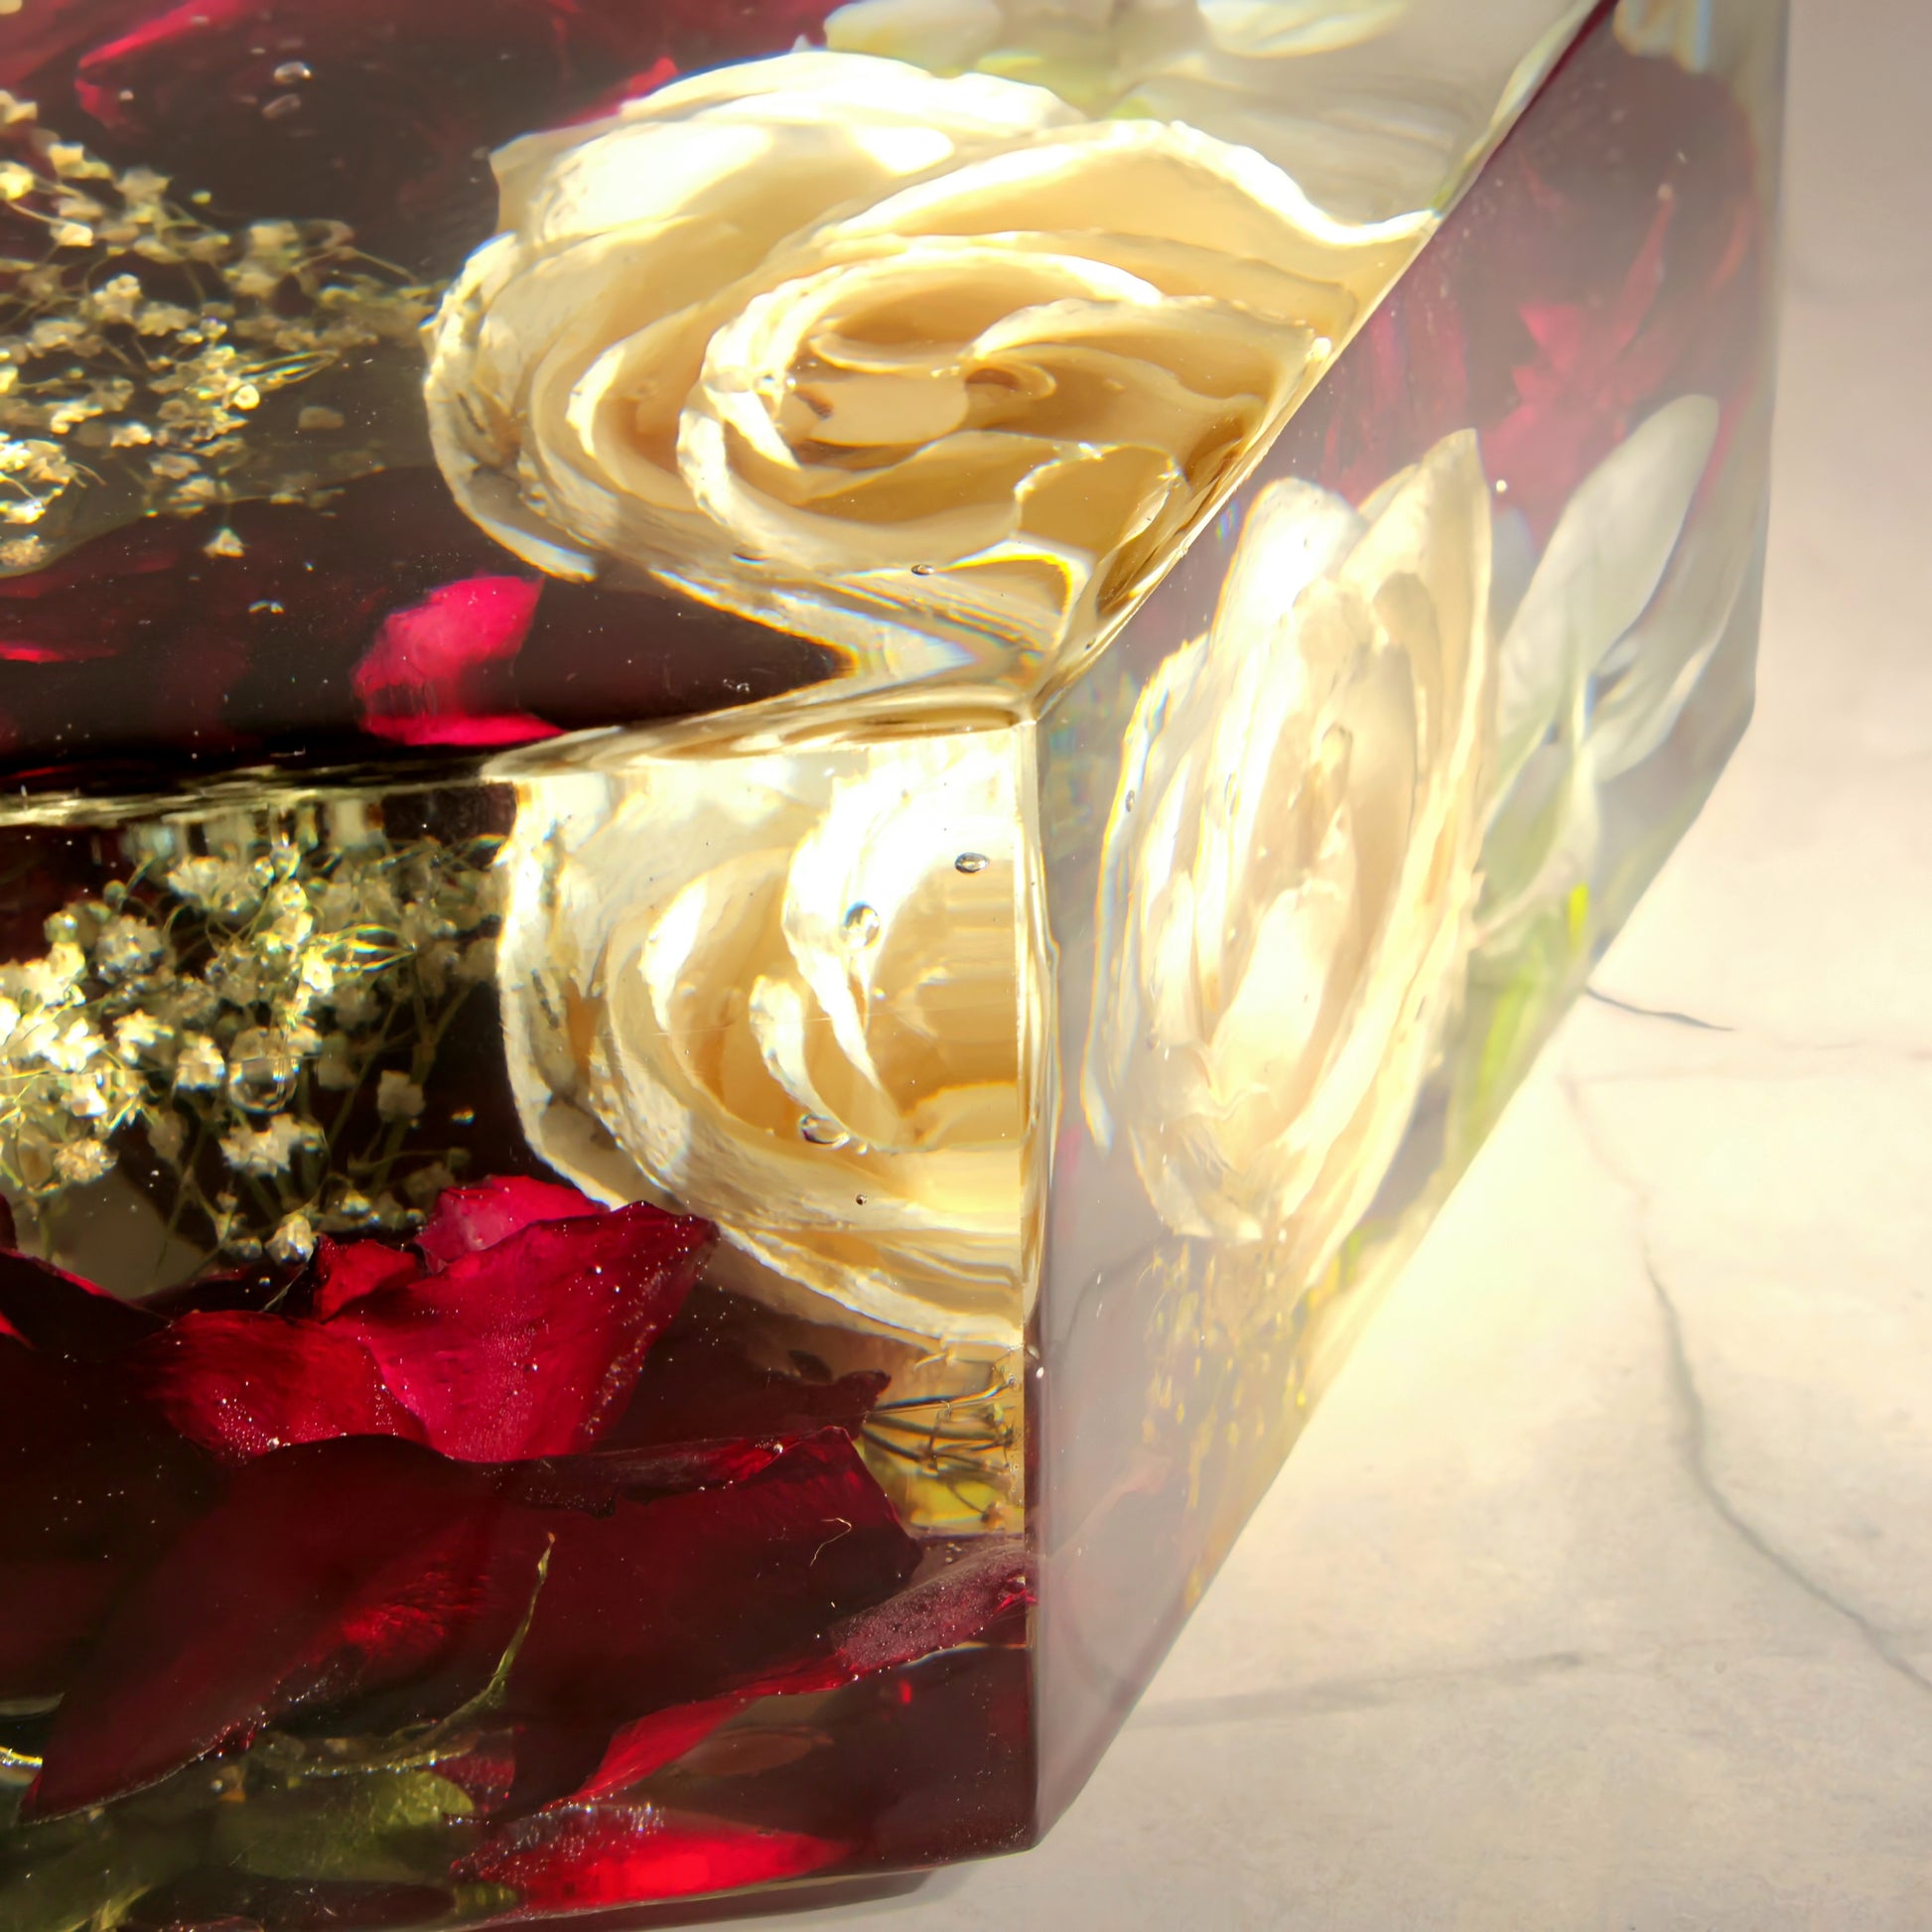 Red Rose 12" Hexagon 3D Resin Wedding Bouquet Preservation Floral Gift Keepsake Save Your Wedding Flowers Forever - flofloflowery